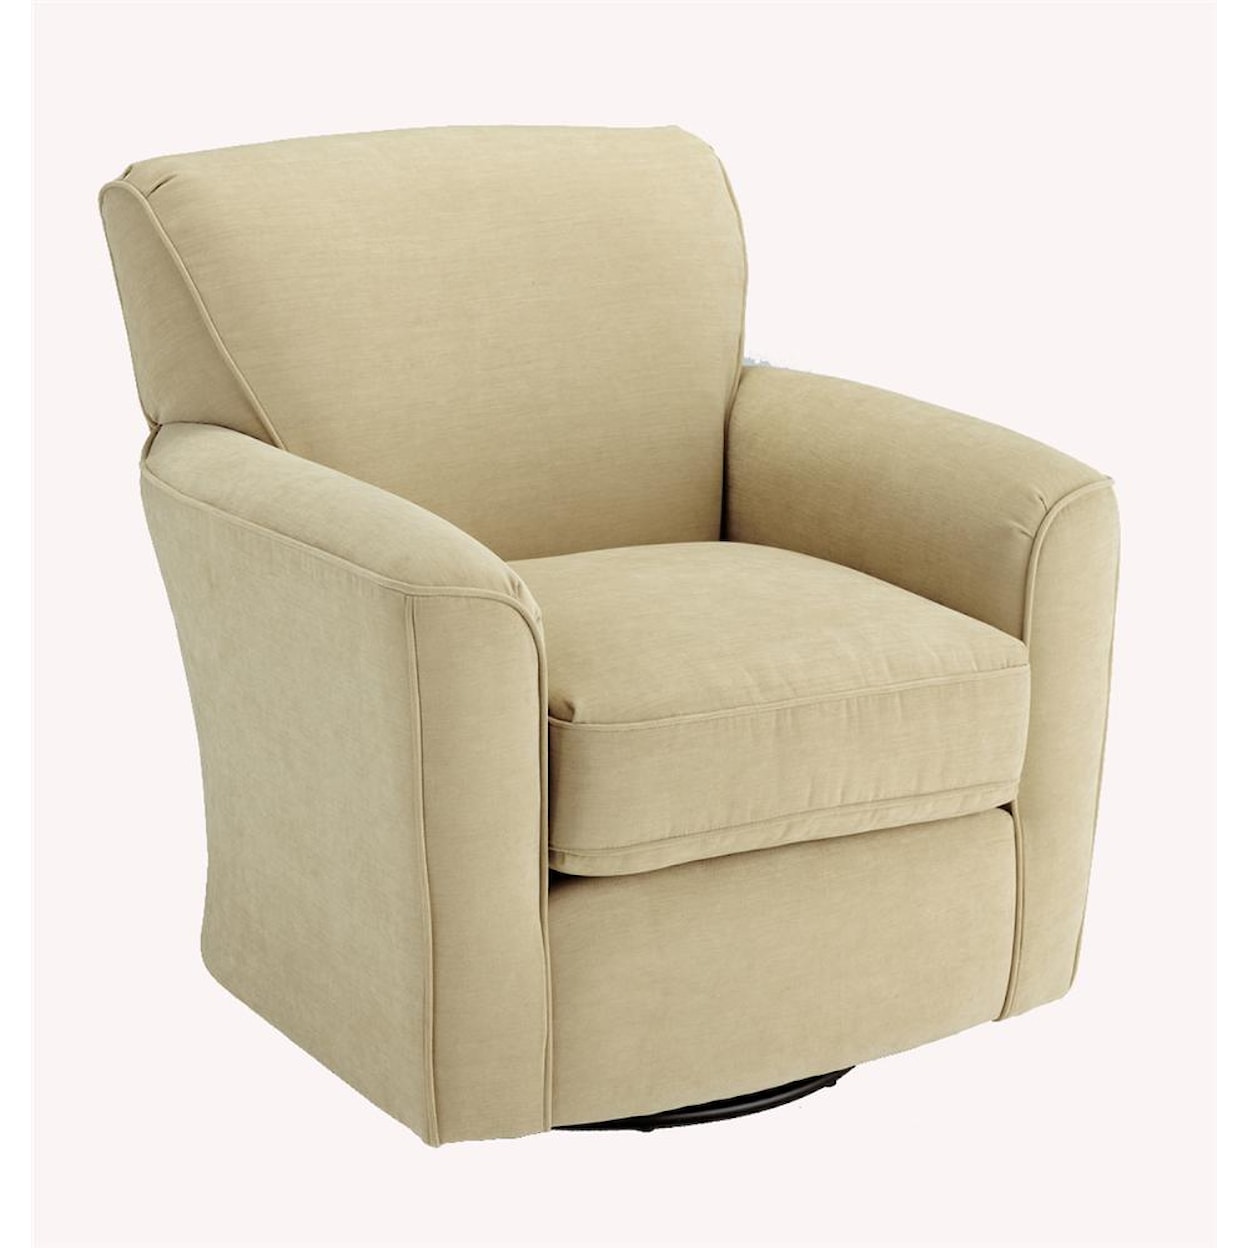 Bravo Furniture Kaylee Kaylee Swivel Barrel Chair